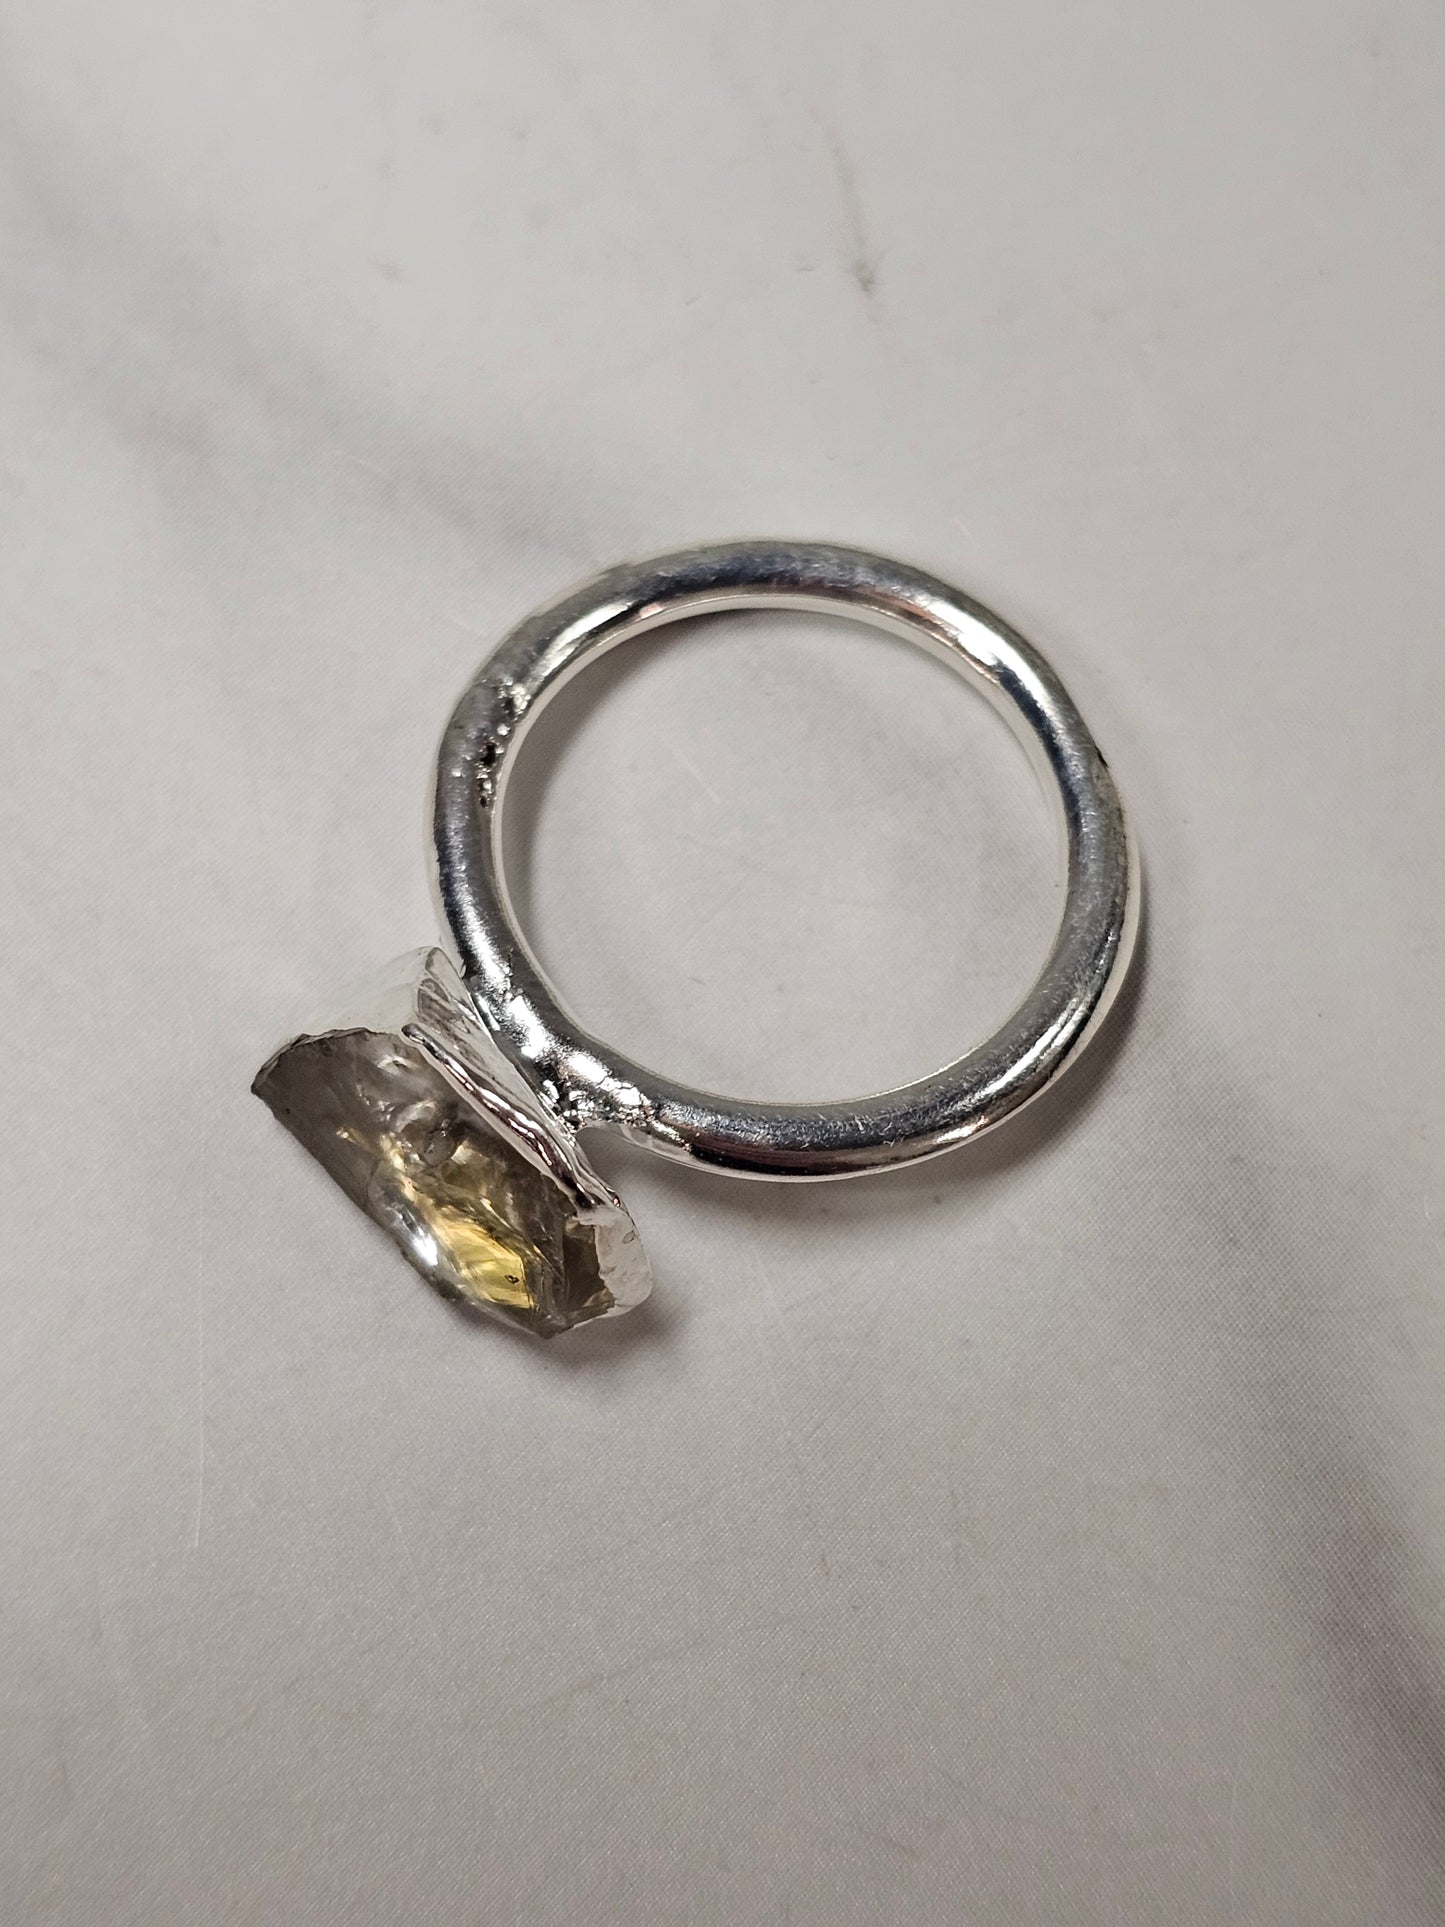 Rough Smokey Quartz Silver Plated Ring Size 7.5